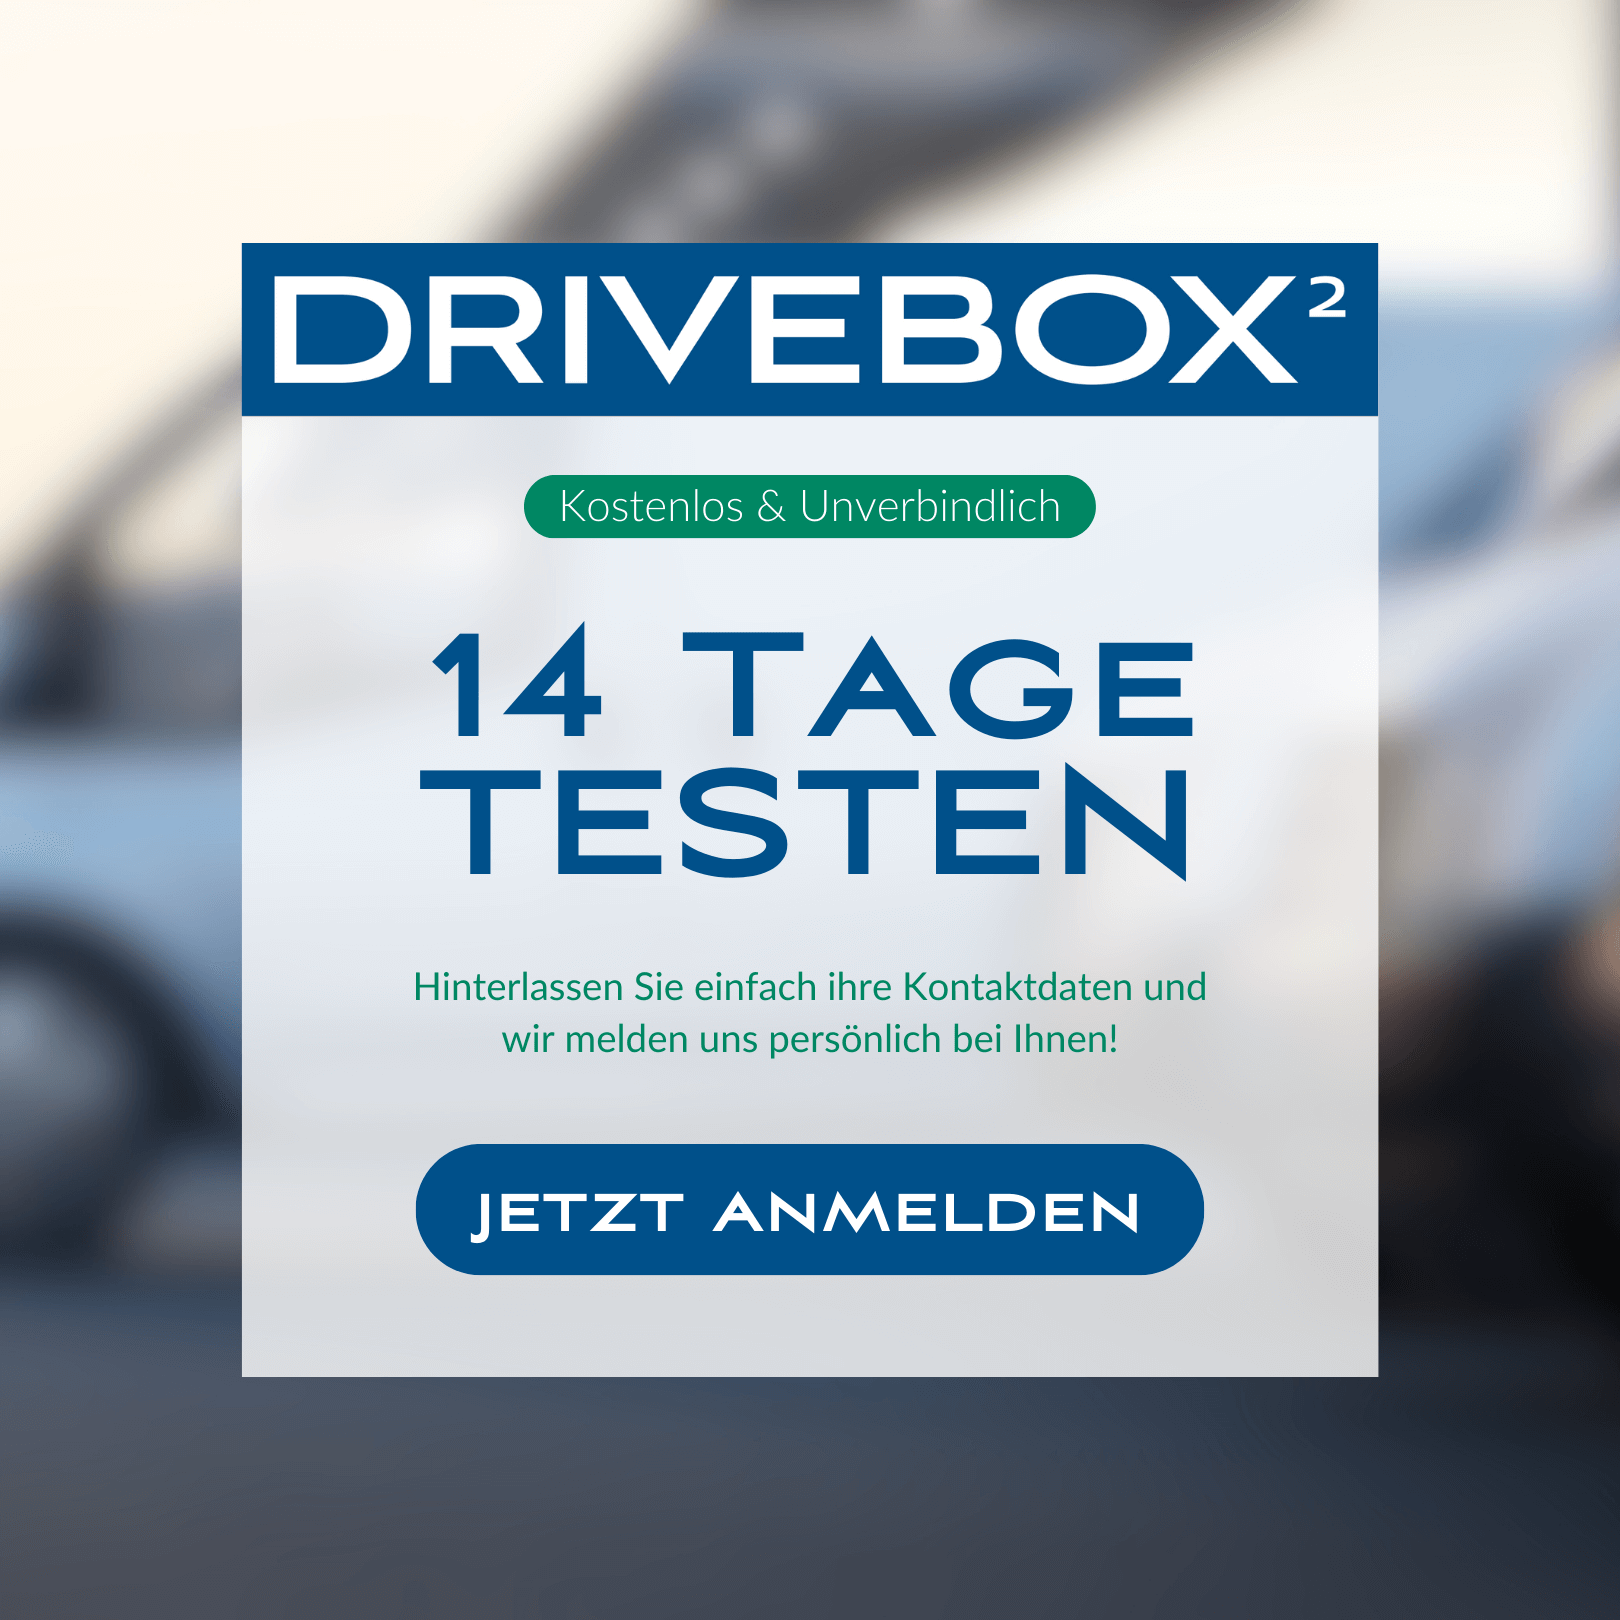 DRIVEBOX - 14 TAGE TESTEN